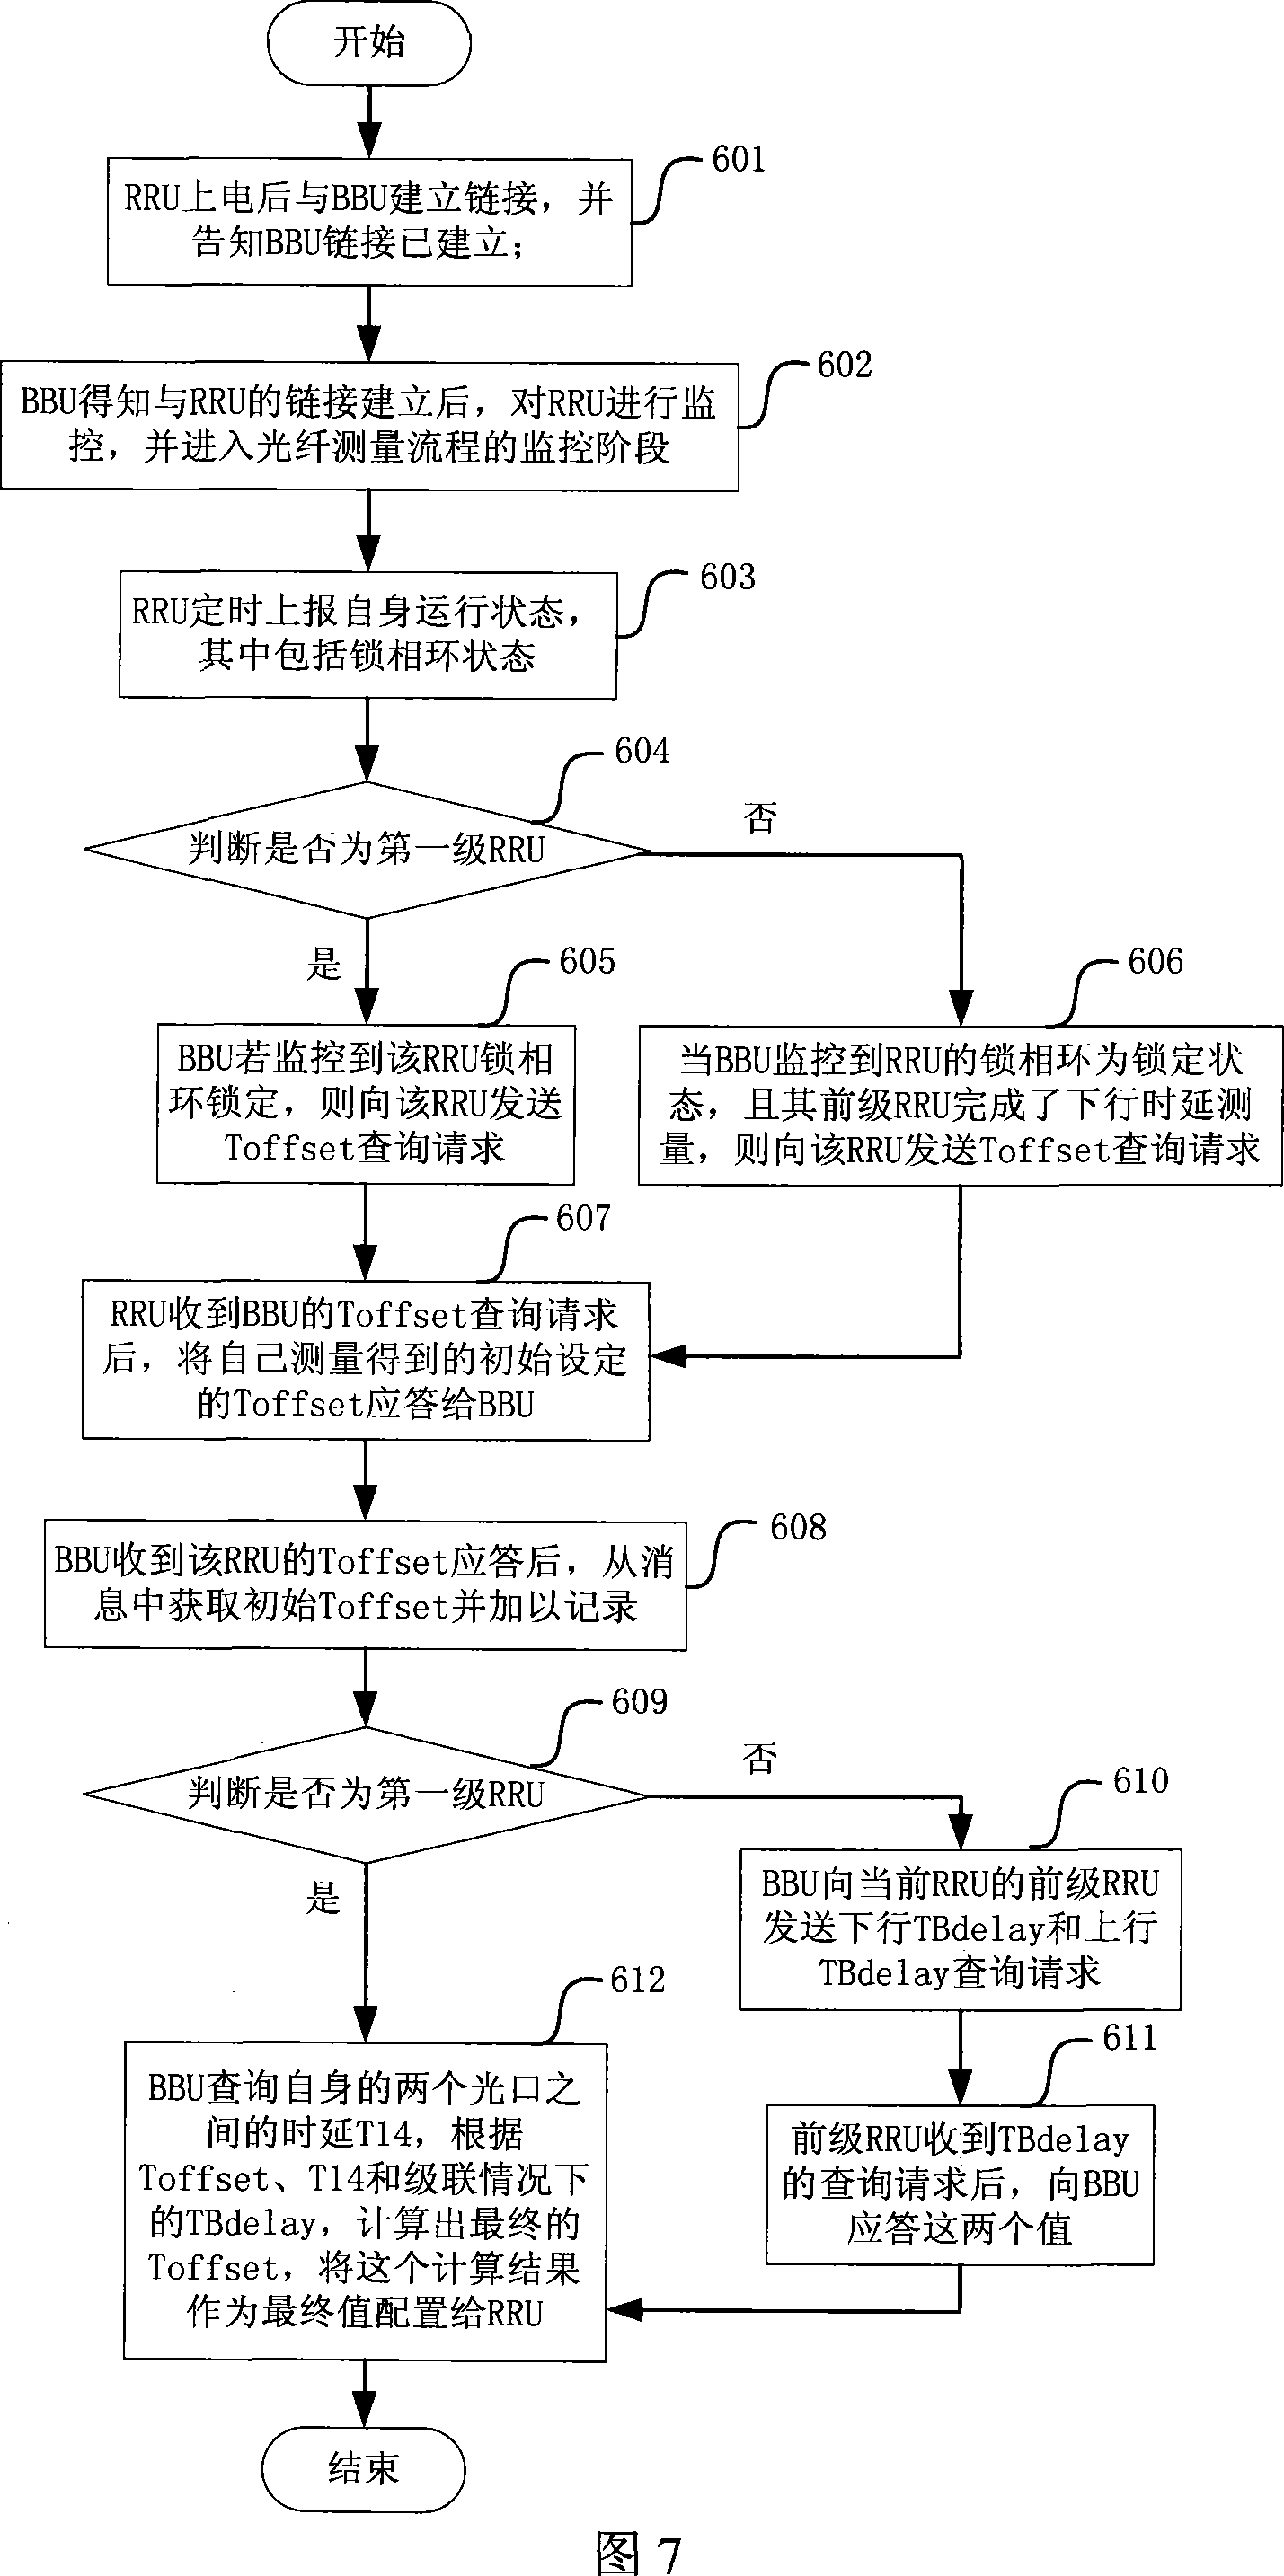 An uplink data transmission method for cascaded RF remote unit